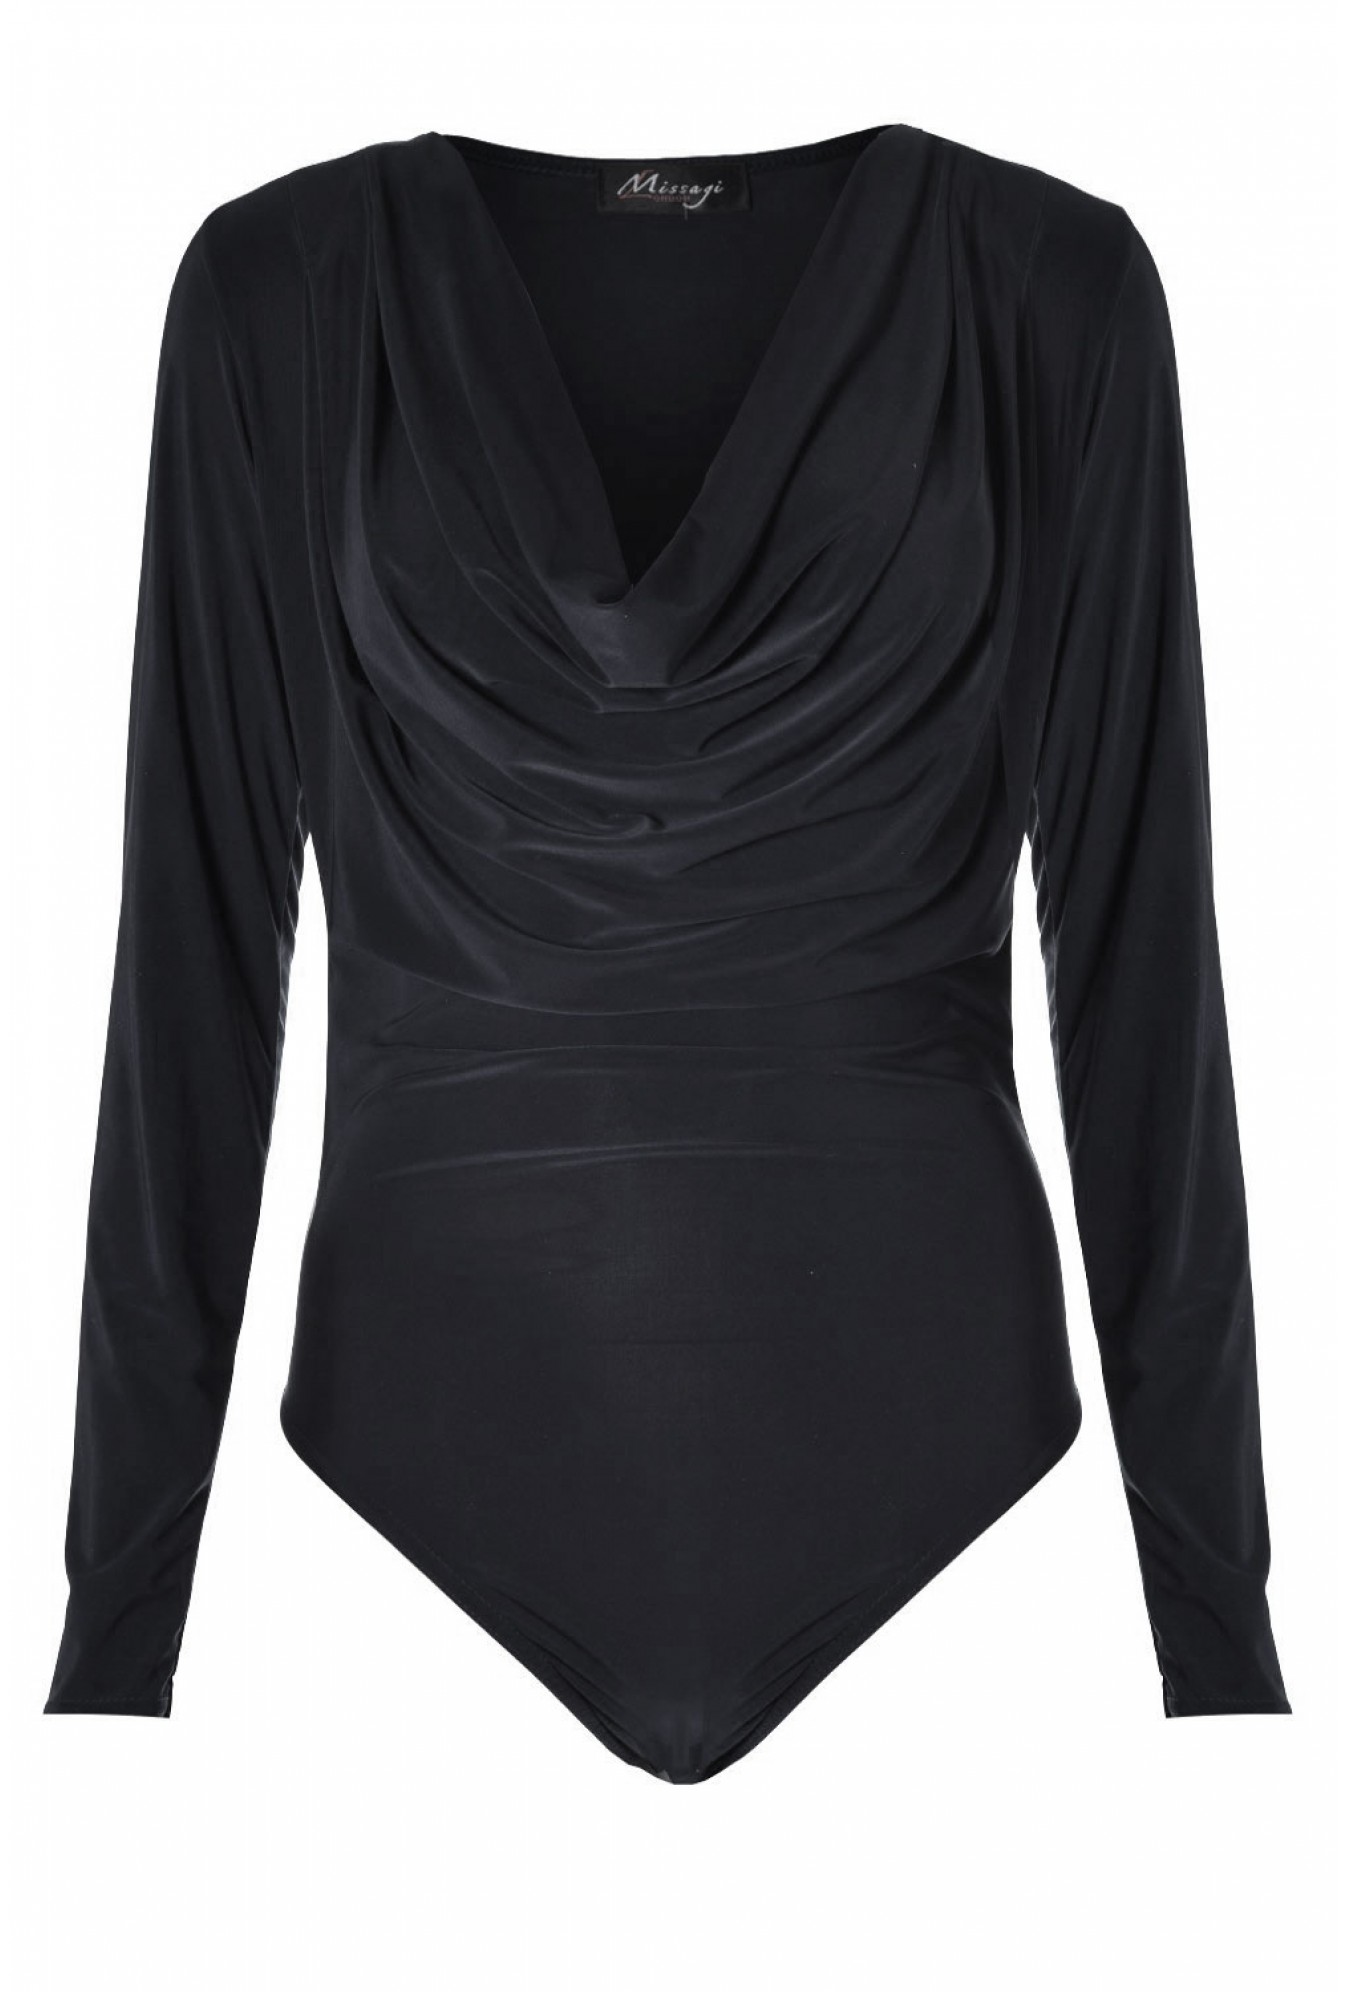 Karly Cowl Neck Bodysuit in Black | iCLOTHING